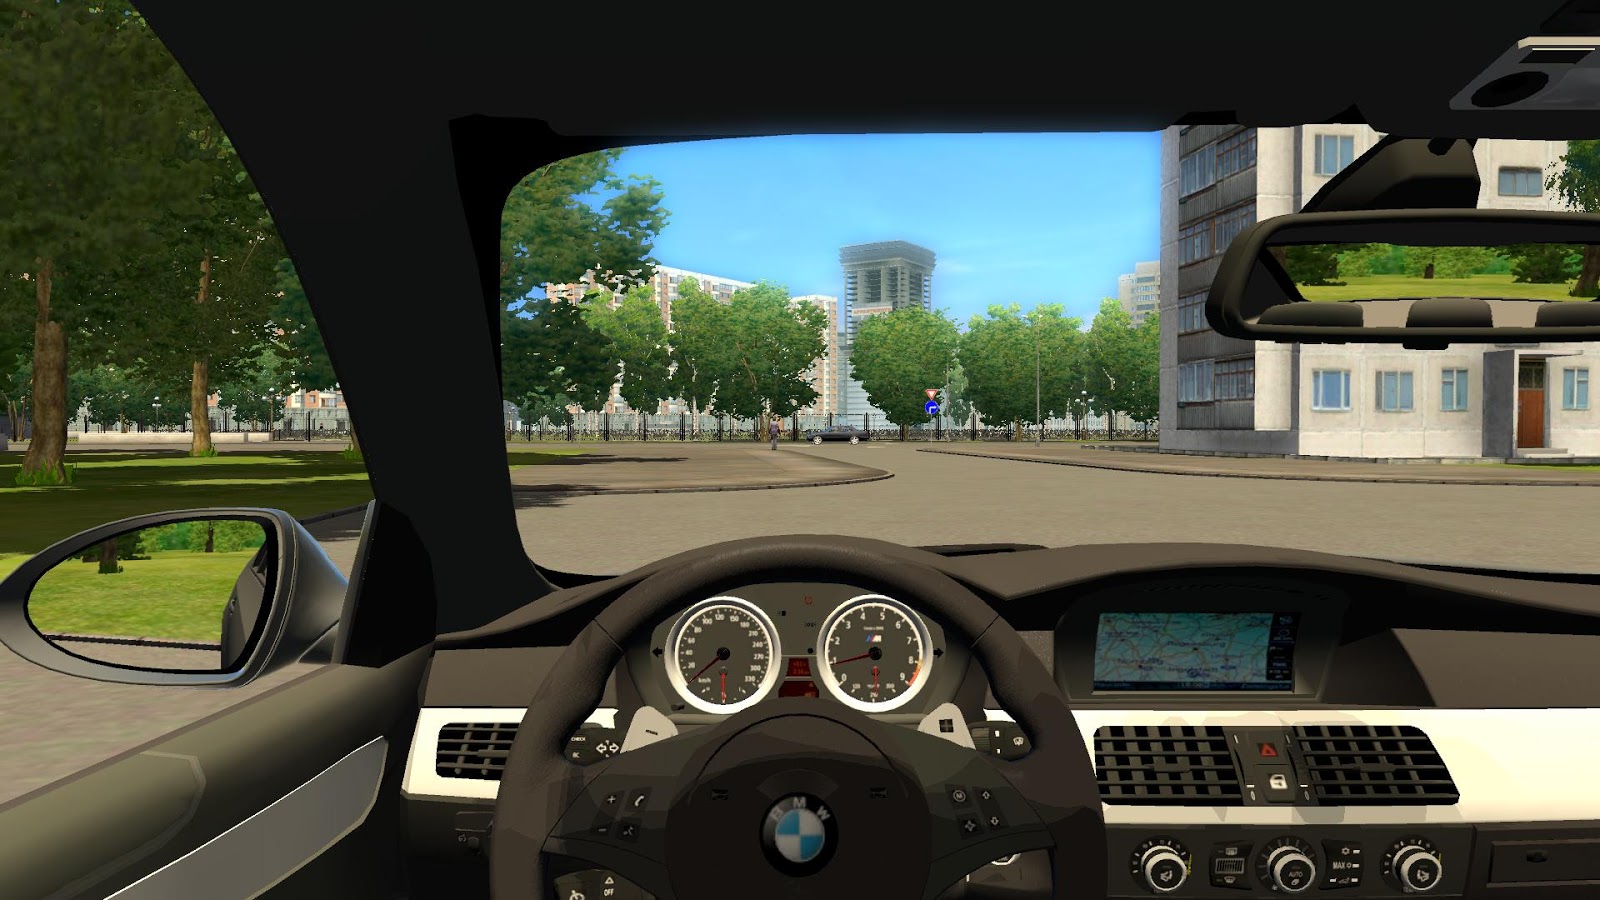 Сити кар драйвинг моды м5 е60. BMW e60 2006 City car Driving. City car Driving m5 e60 Heinsberg. City car Driving BMW e60. Сити кар драйвинг BMW m3 Touring.